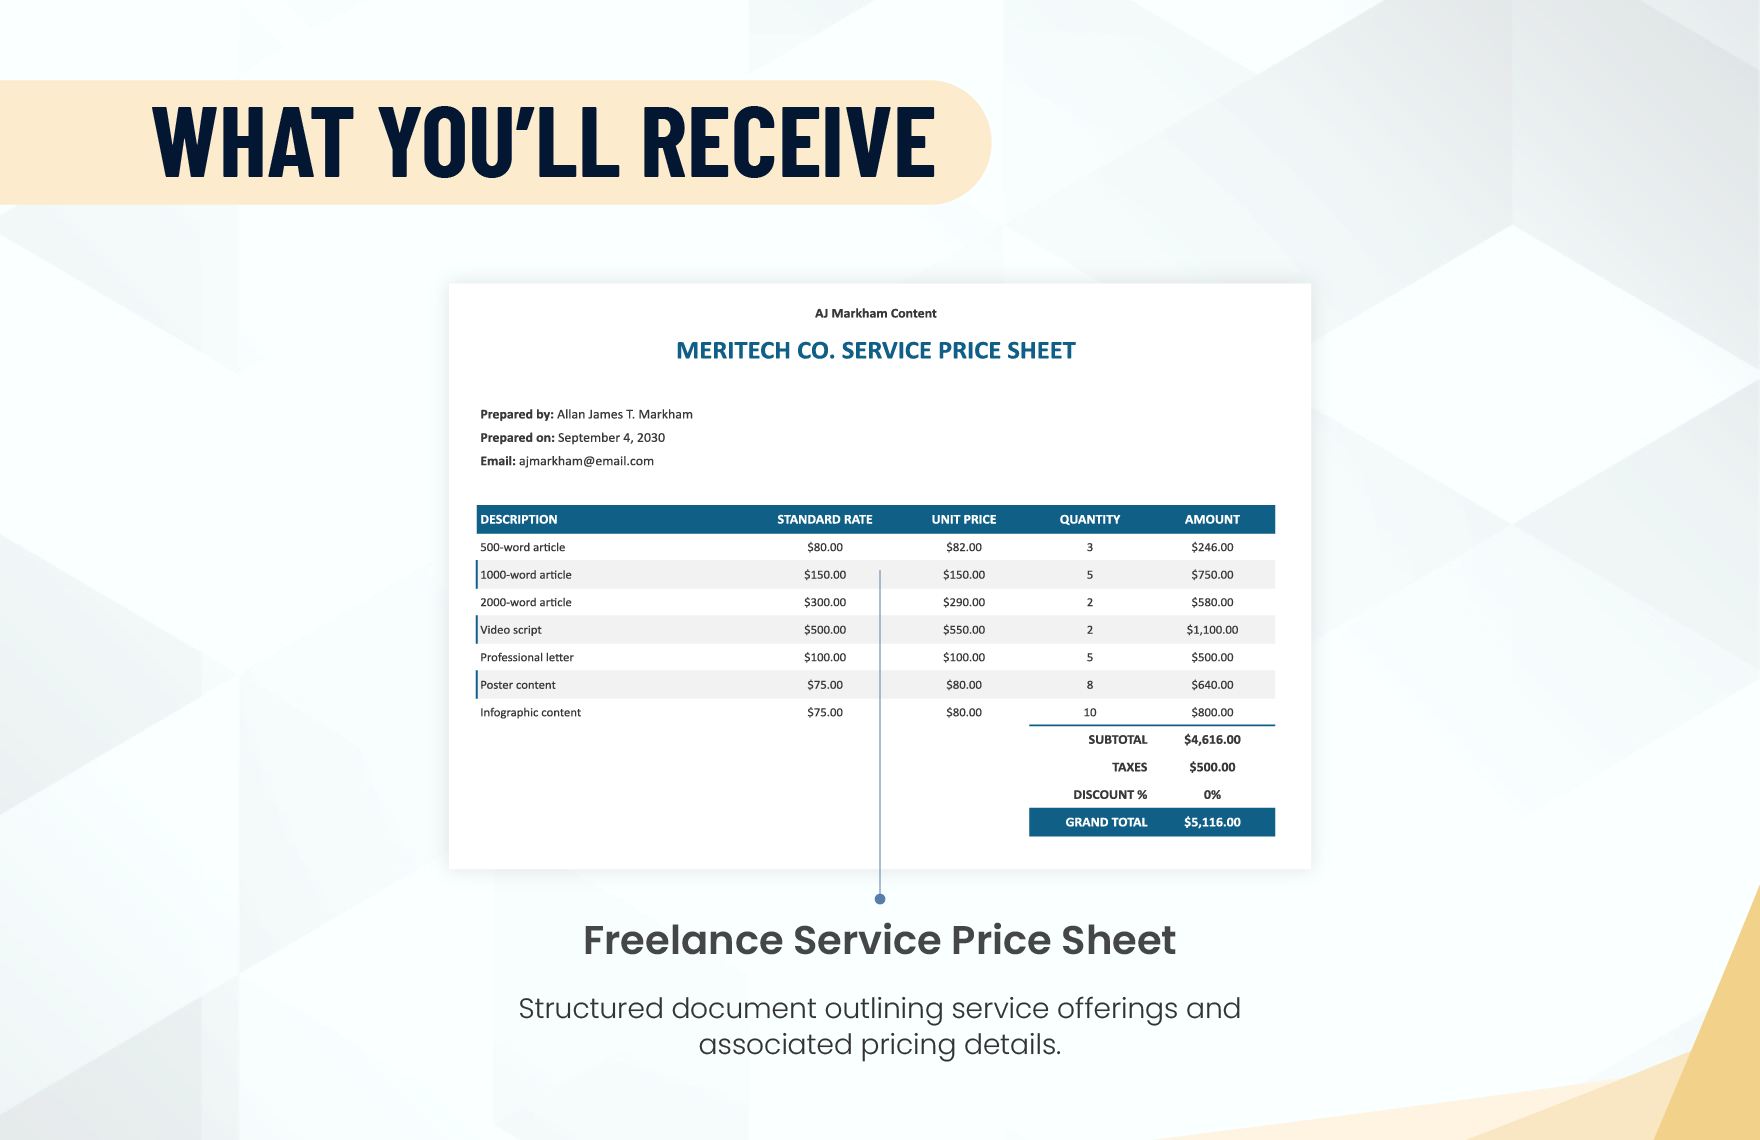 Freelance Service Price Sheet Template